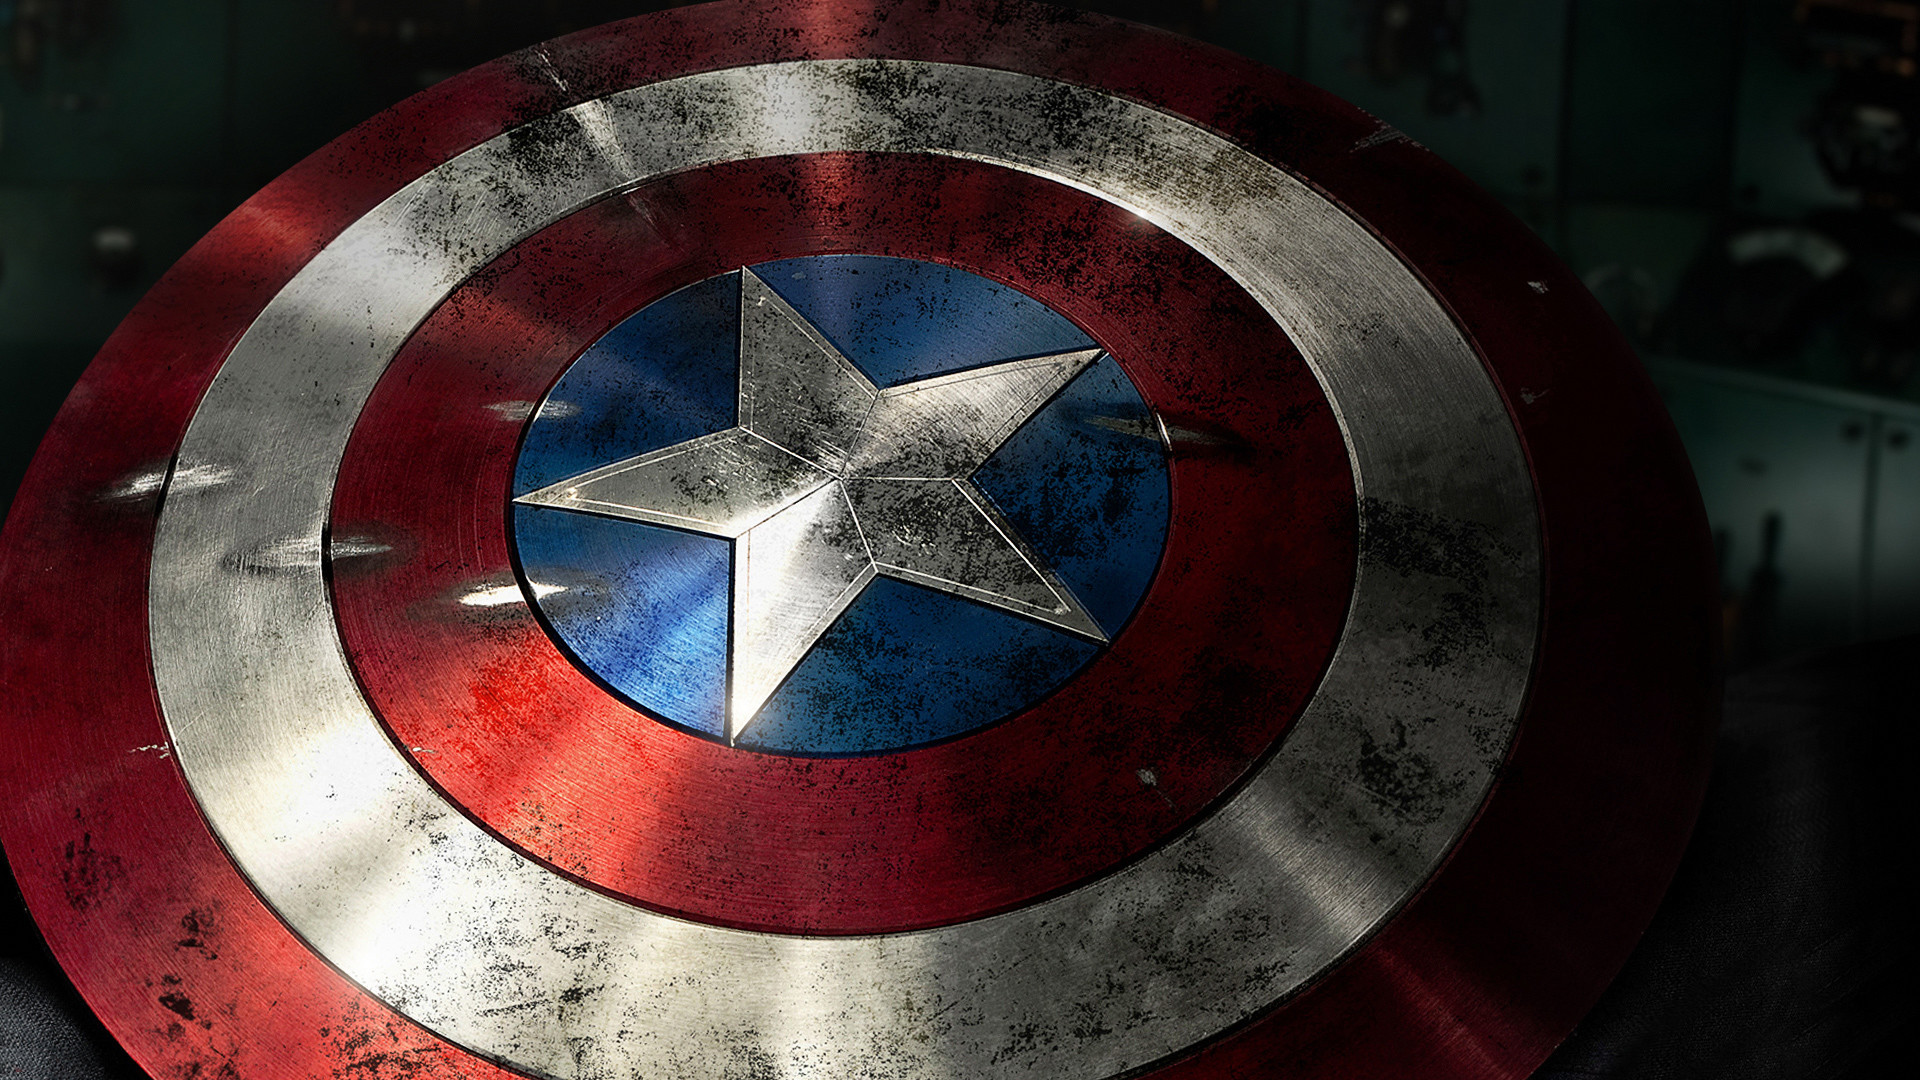 Captain America Desktop Wallpaper Image